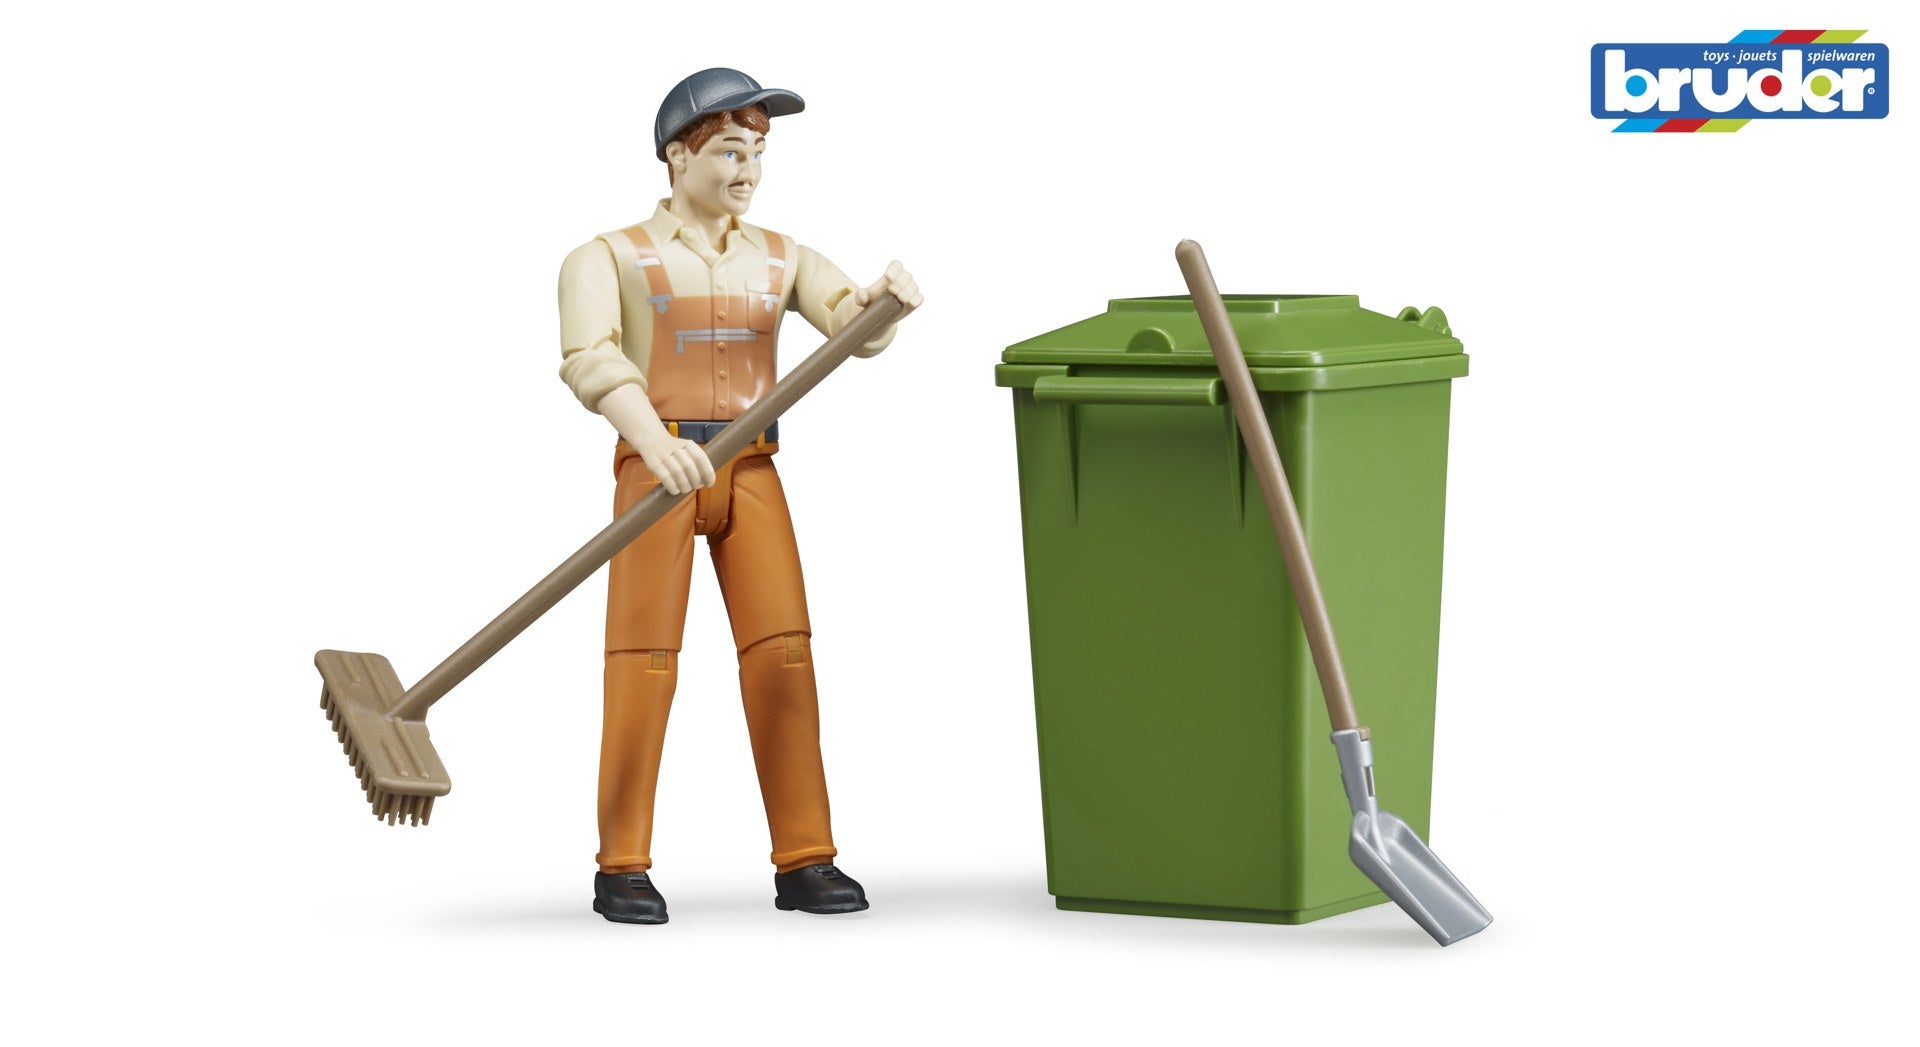 BRUDER - Bworld Worker Waste Disposal Figure Set with Waste Bin & Tools